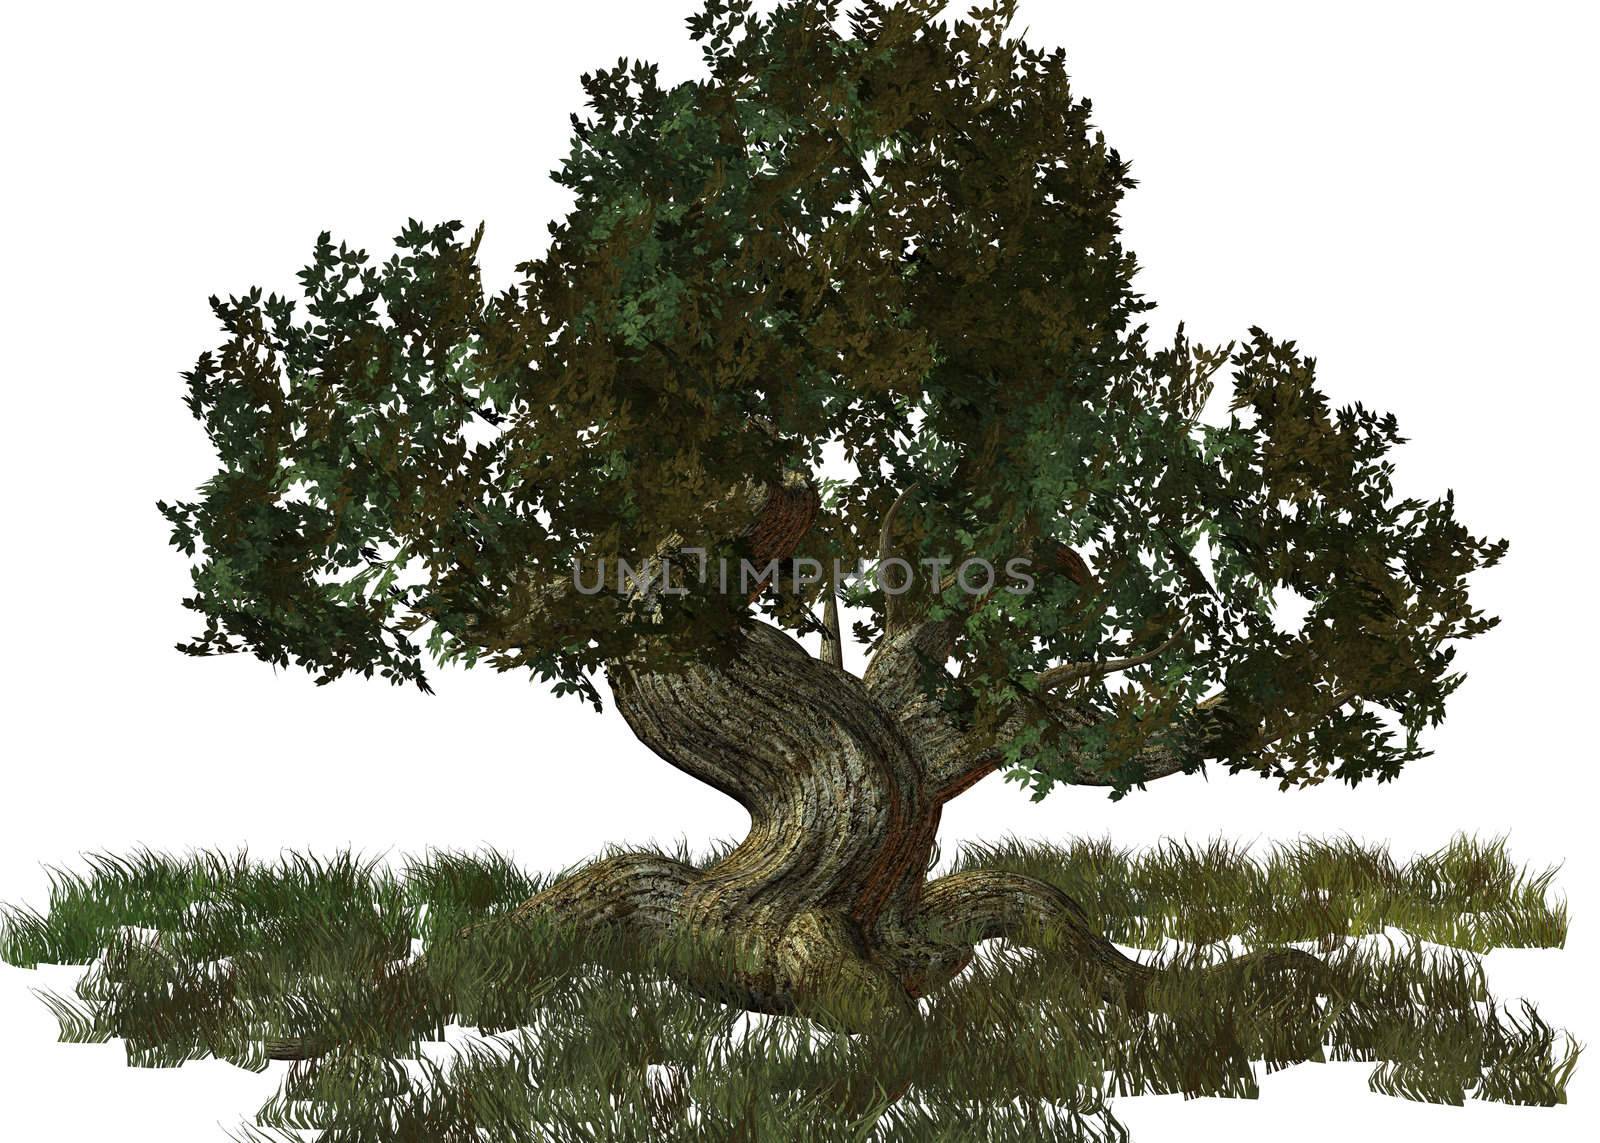 One Big Tree by kathygold